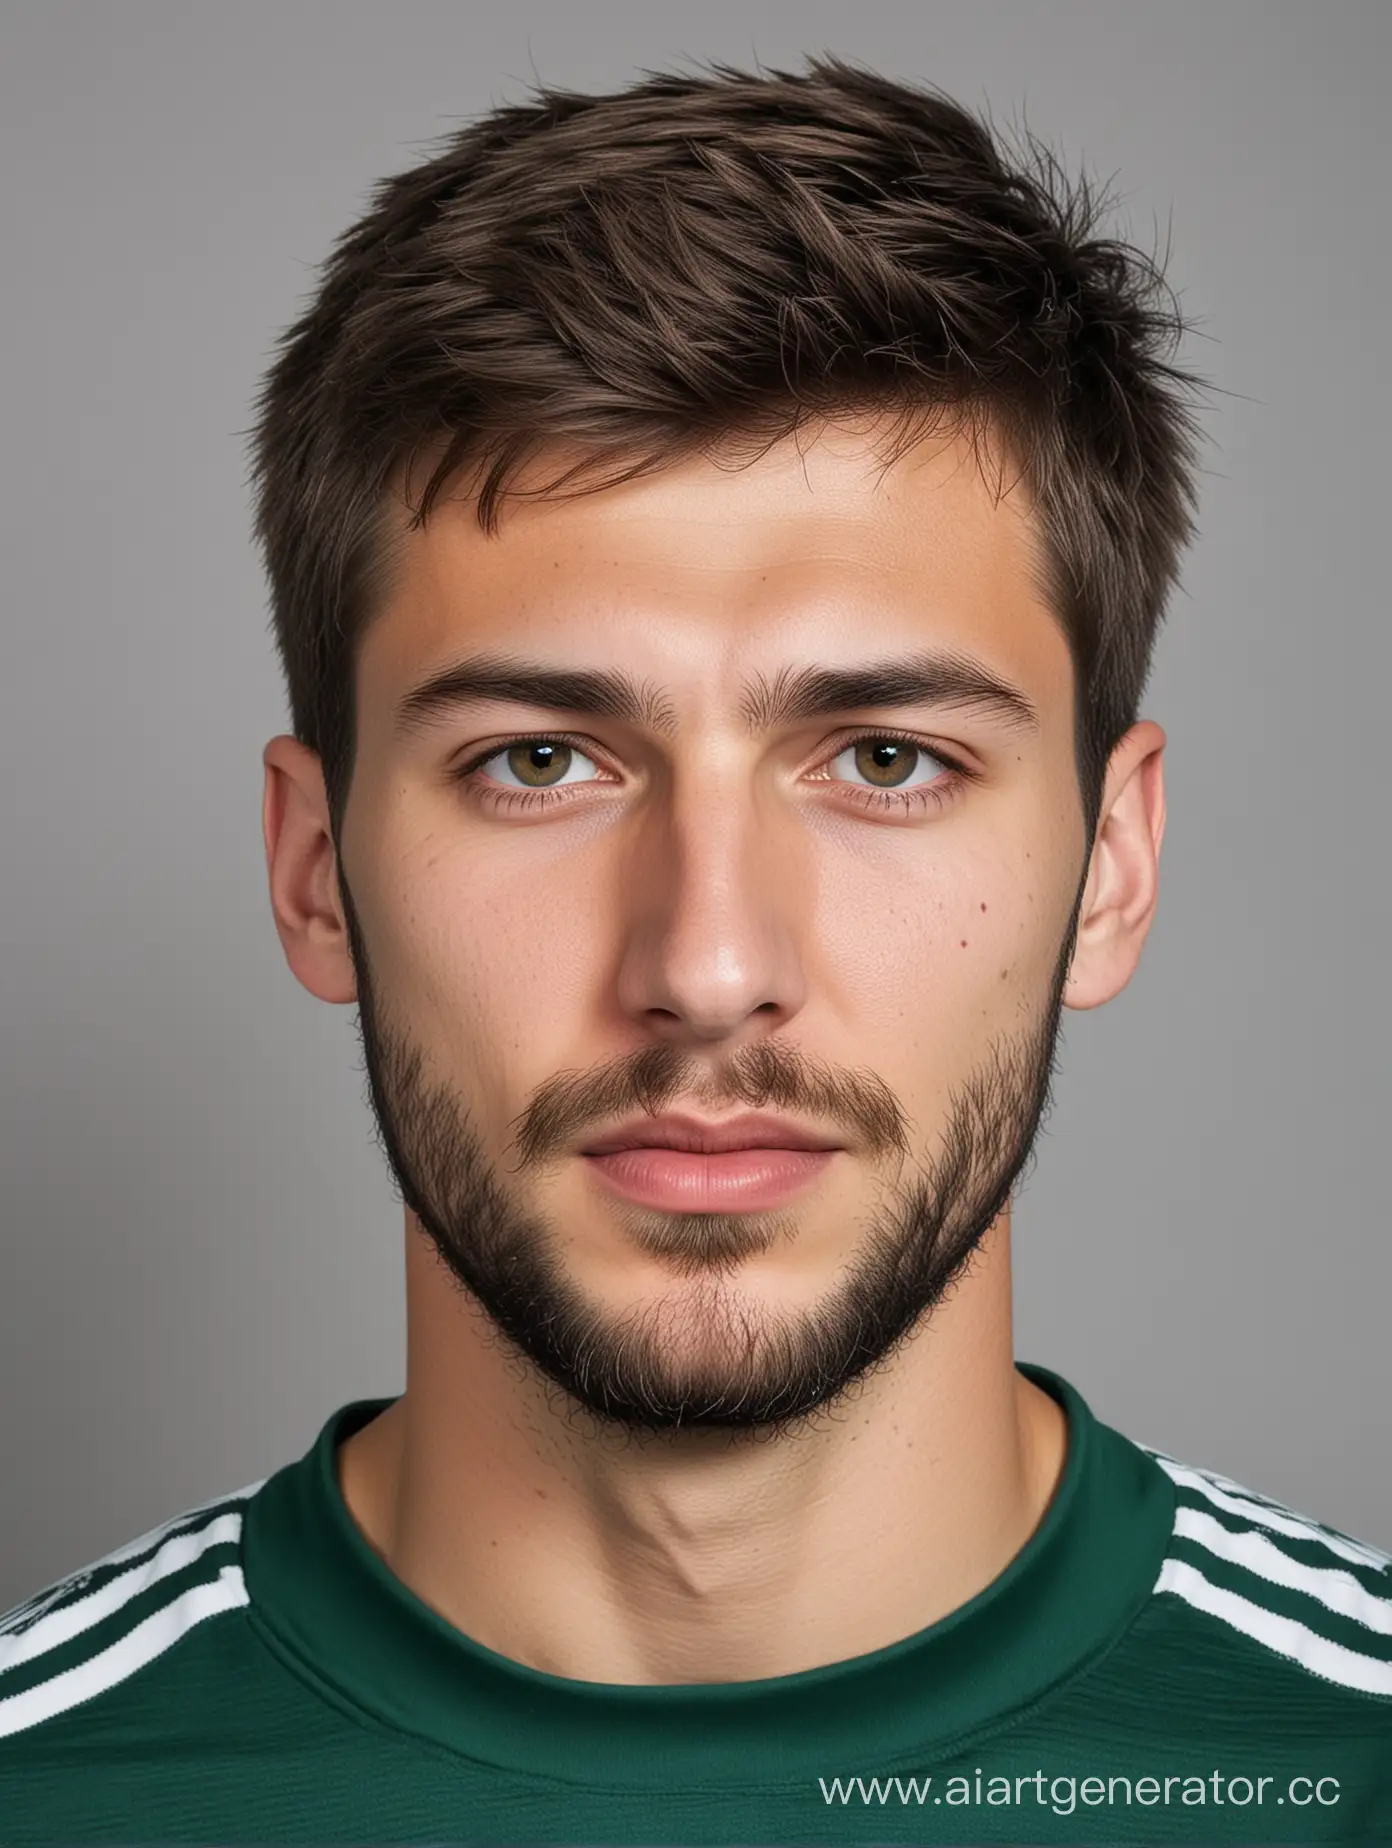 Stylish-Russian-Footballer-with-Short-Beard-Portrait-at-25